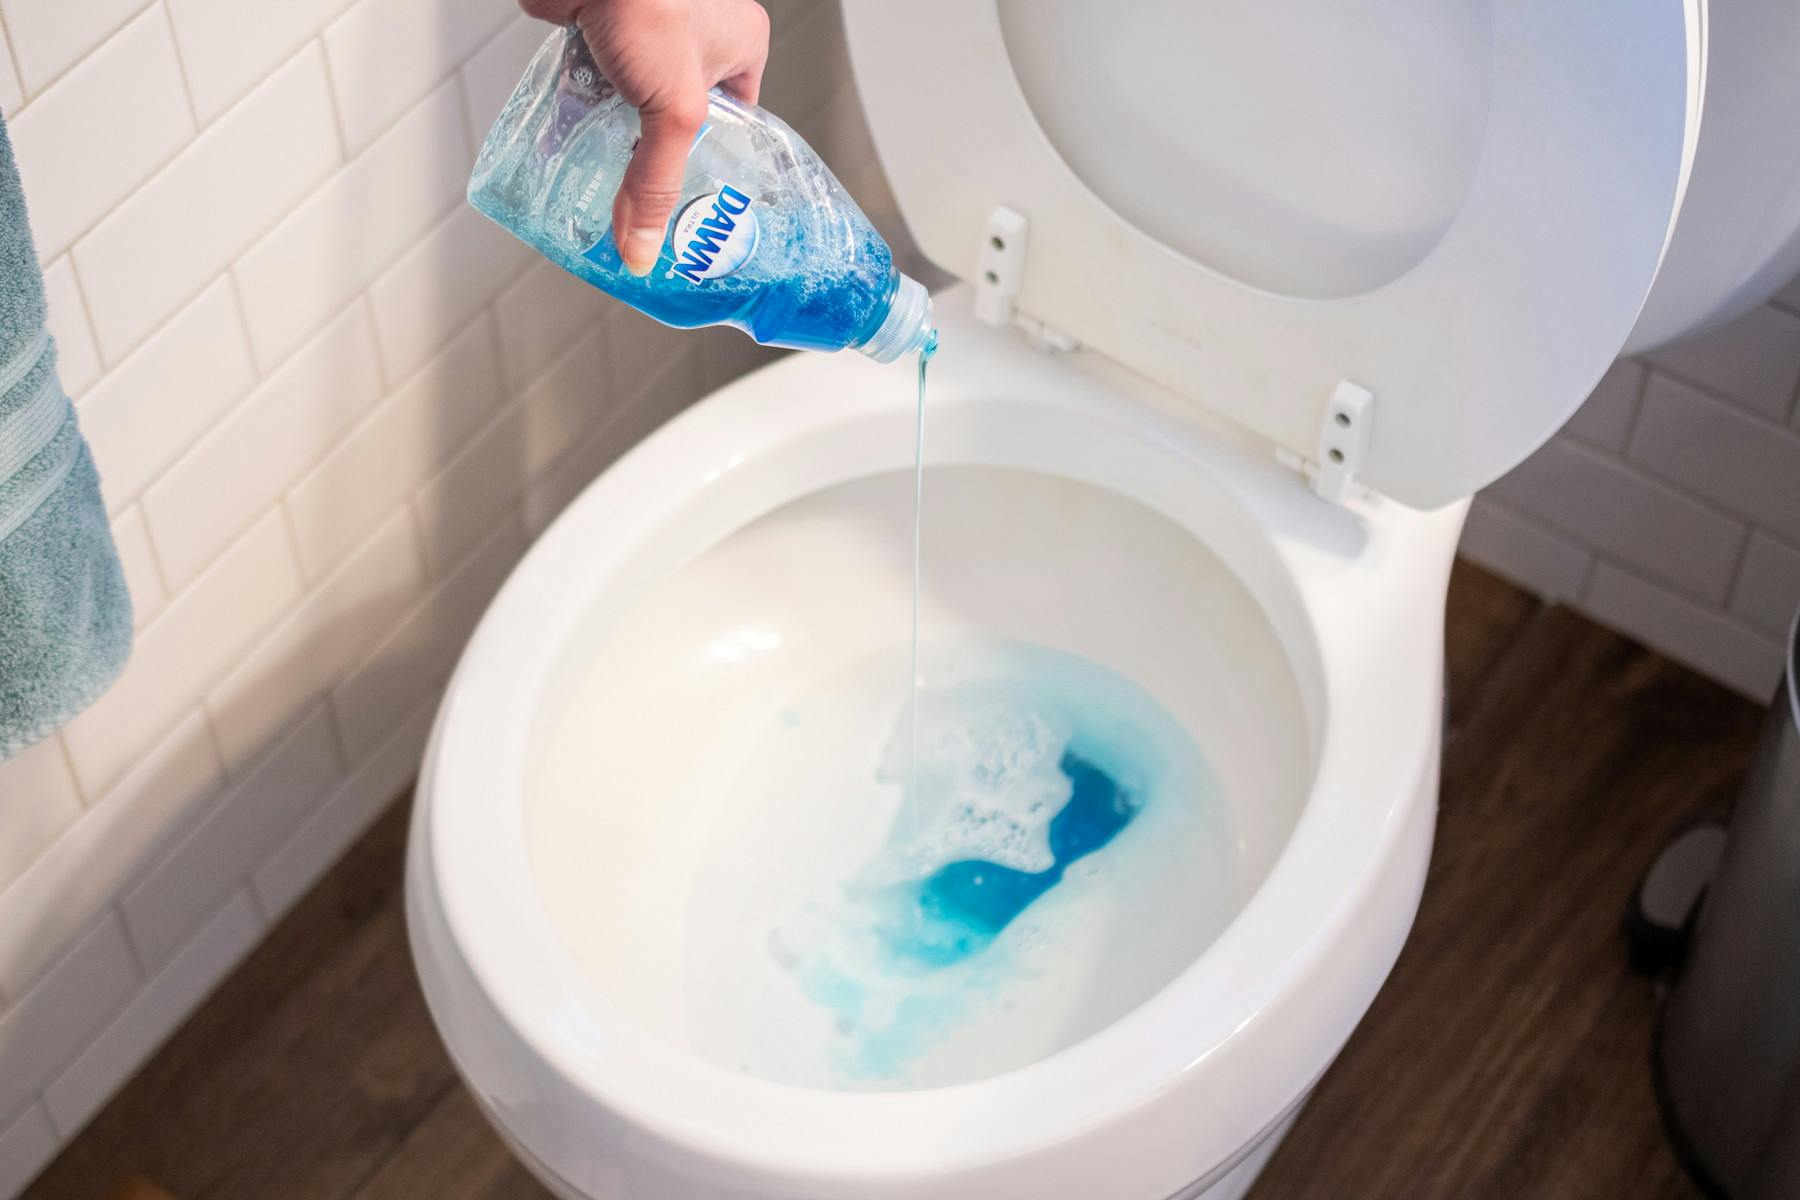 20190620 kcl dawn dish soap hacks unclog toilet 1106 1561420958